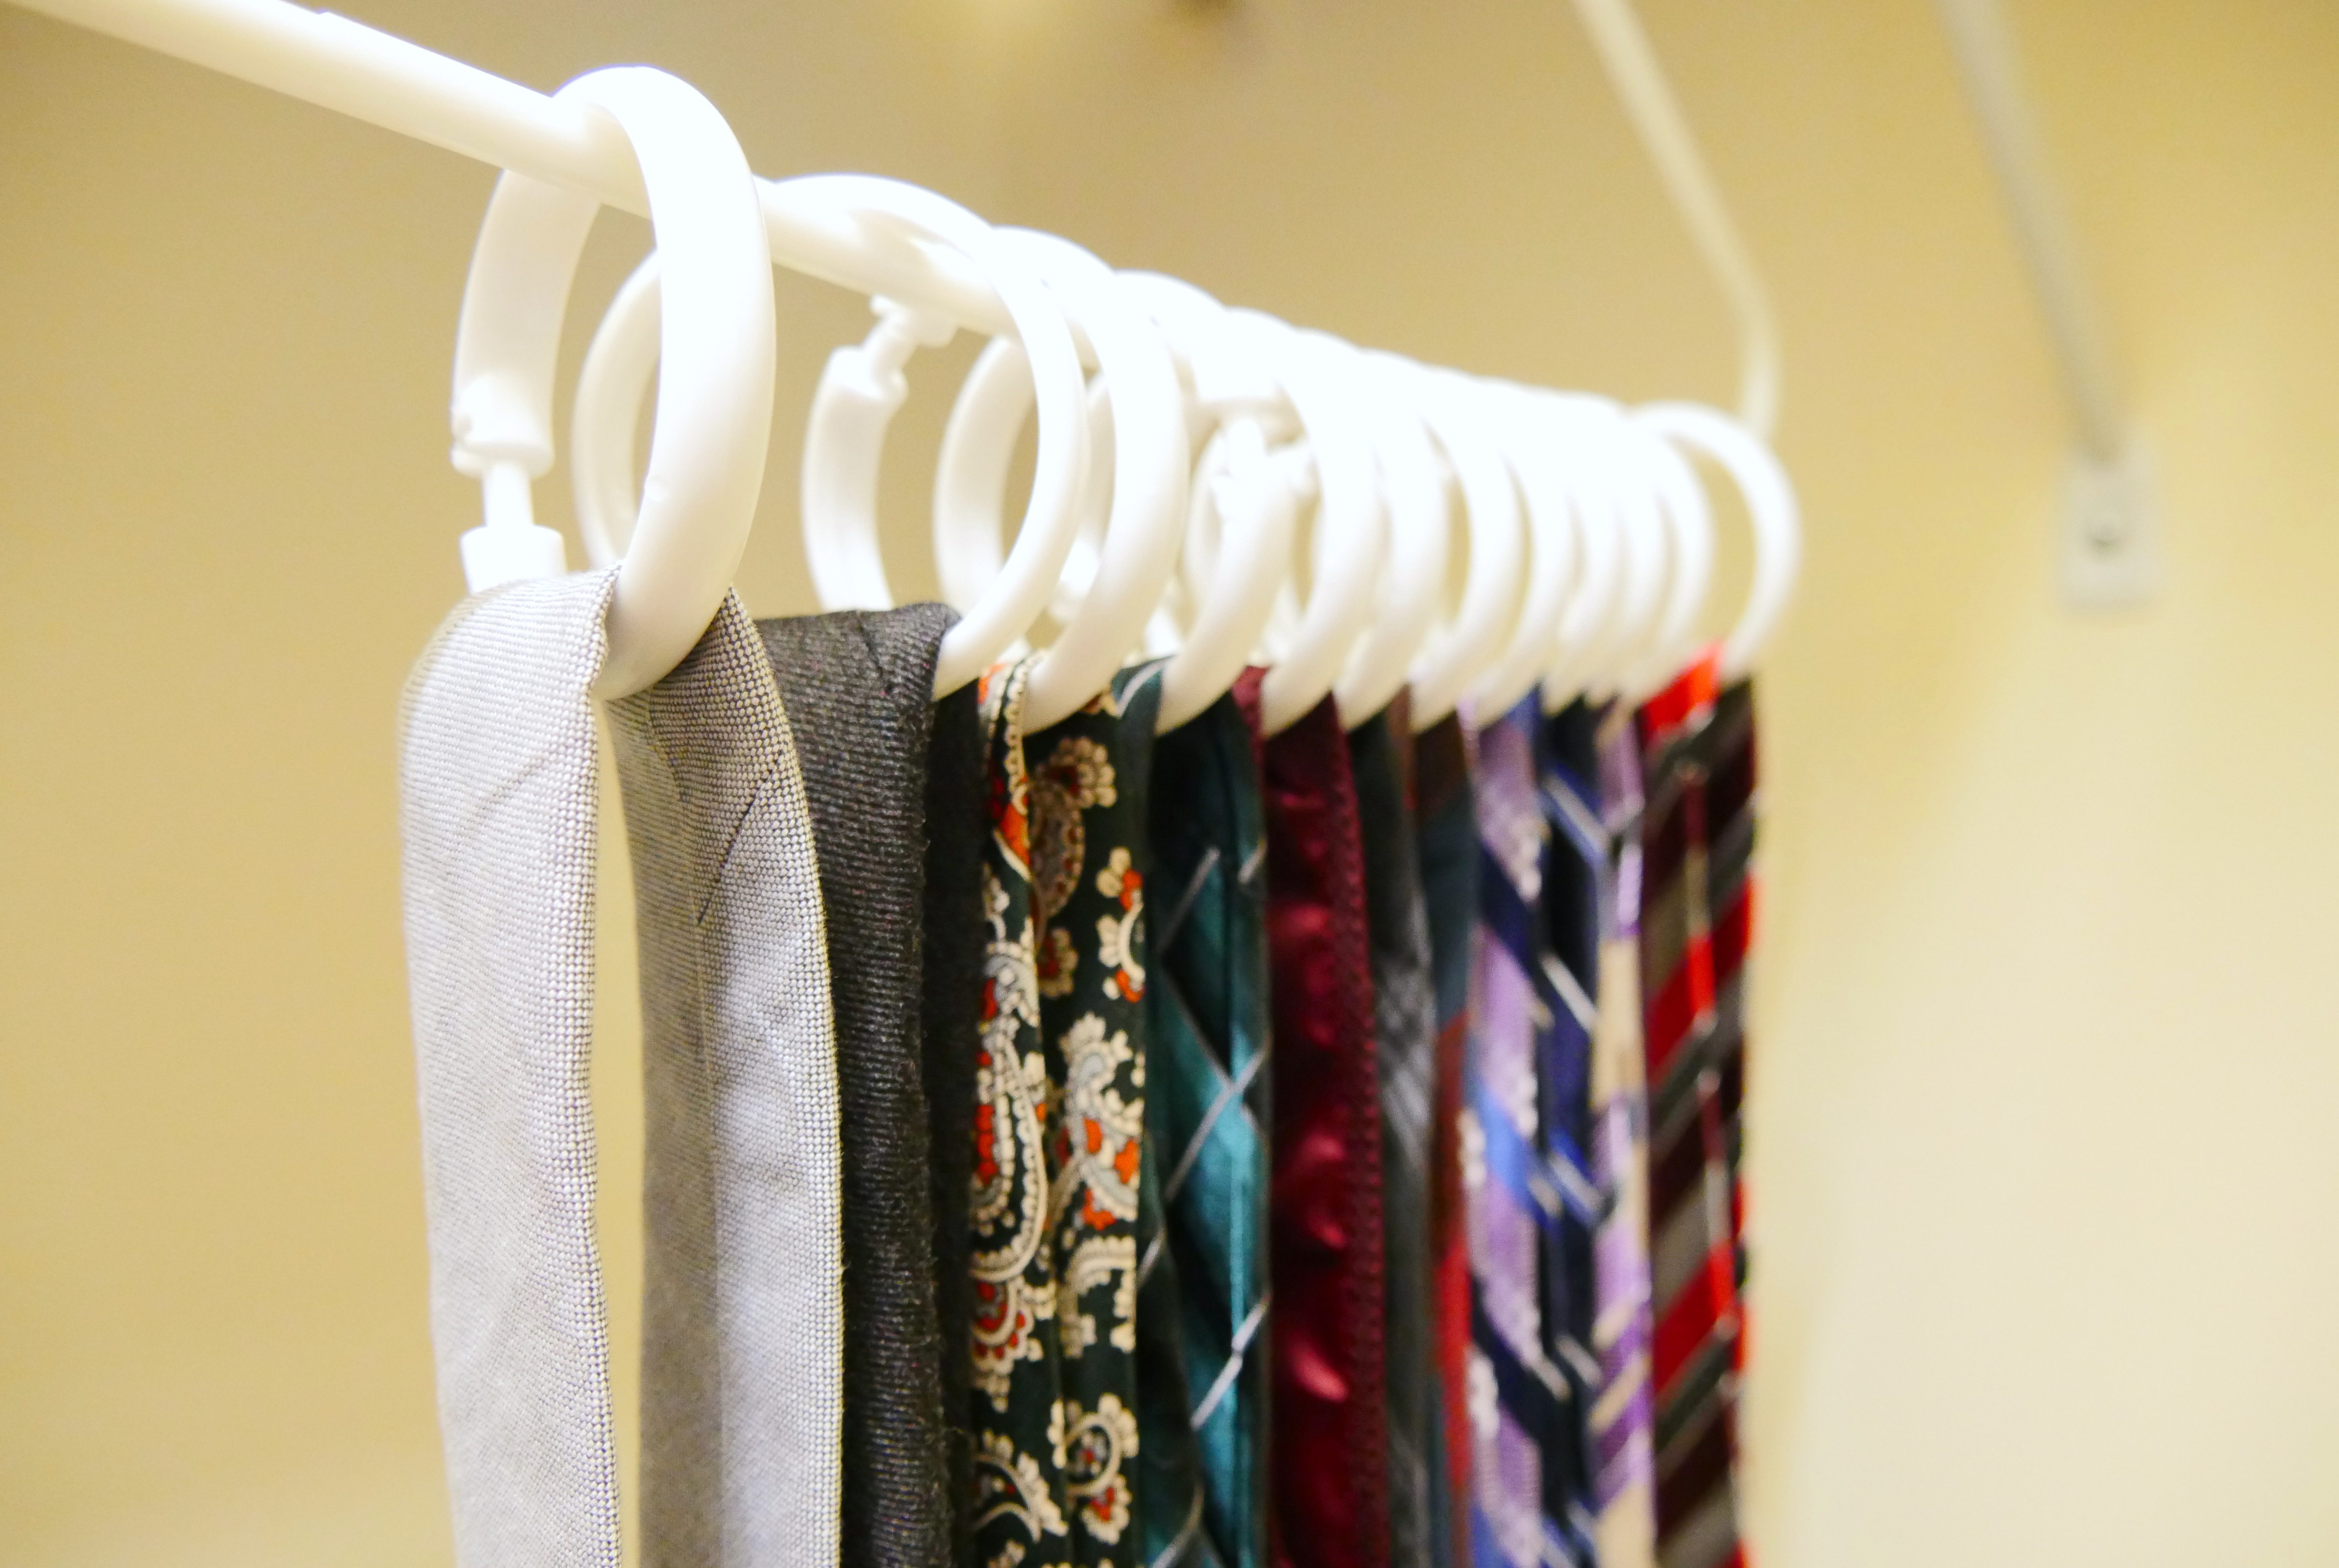 clothes-hanger-ties-scarves.jpg